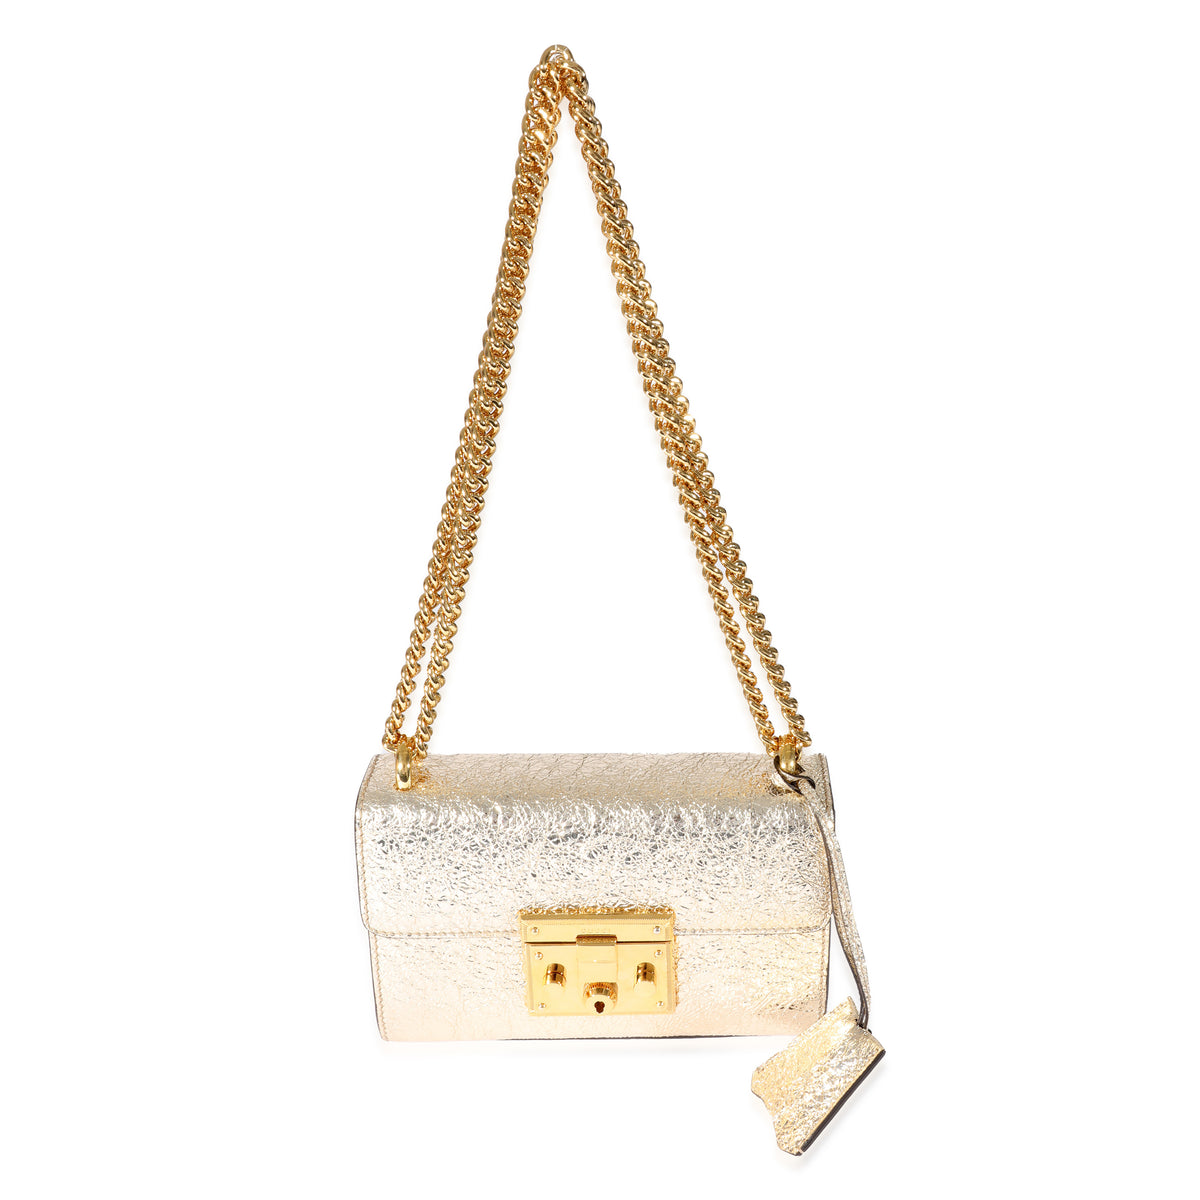 Gucci Gold Metallic Textured Leather Small Padlock Shoulder Bag